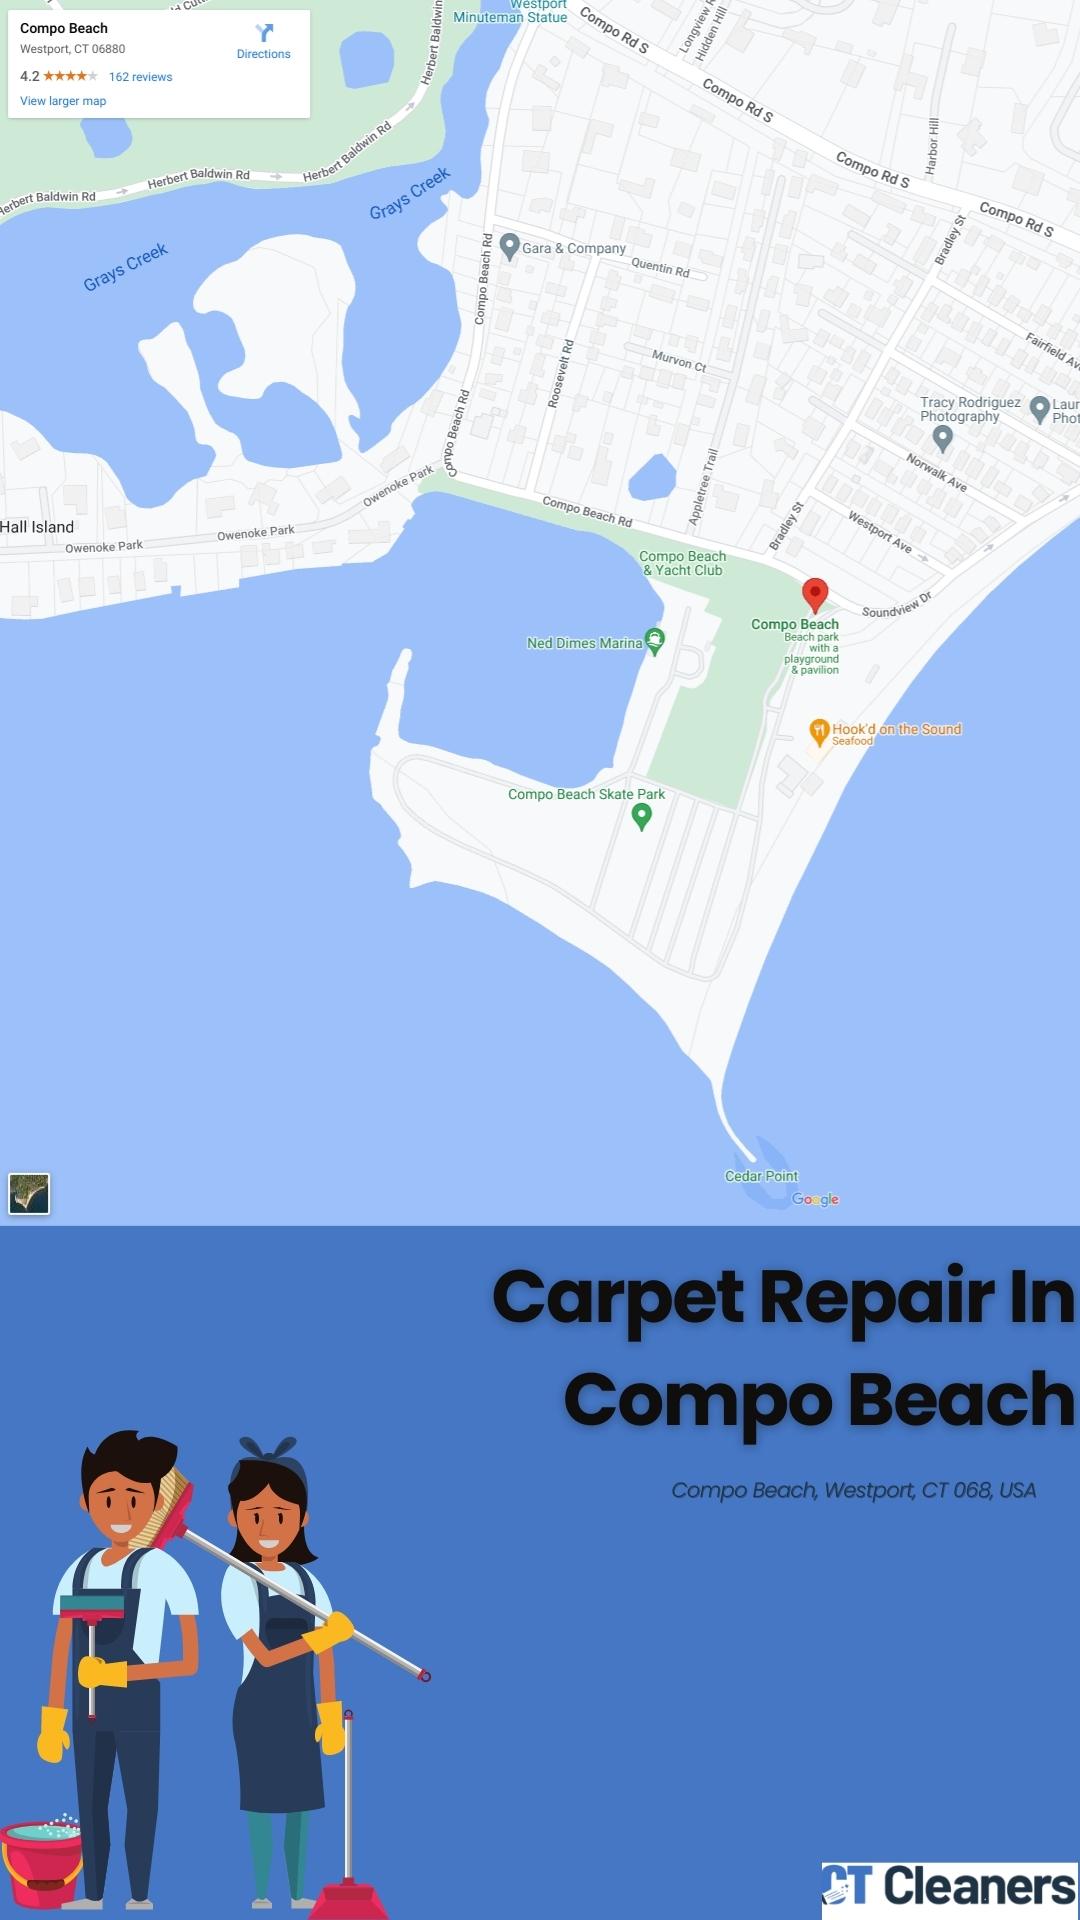 Carpet Repair In Compo Beach Map